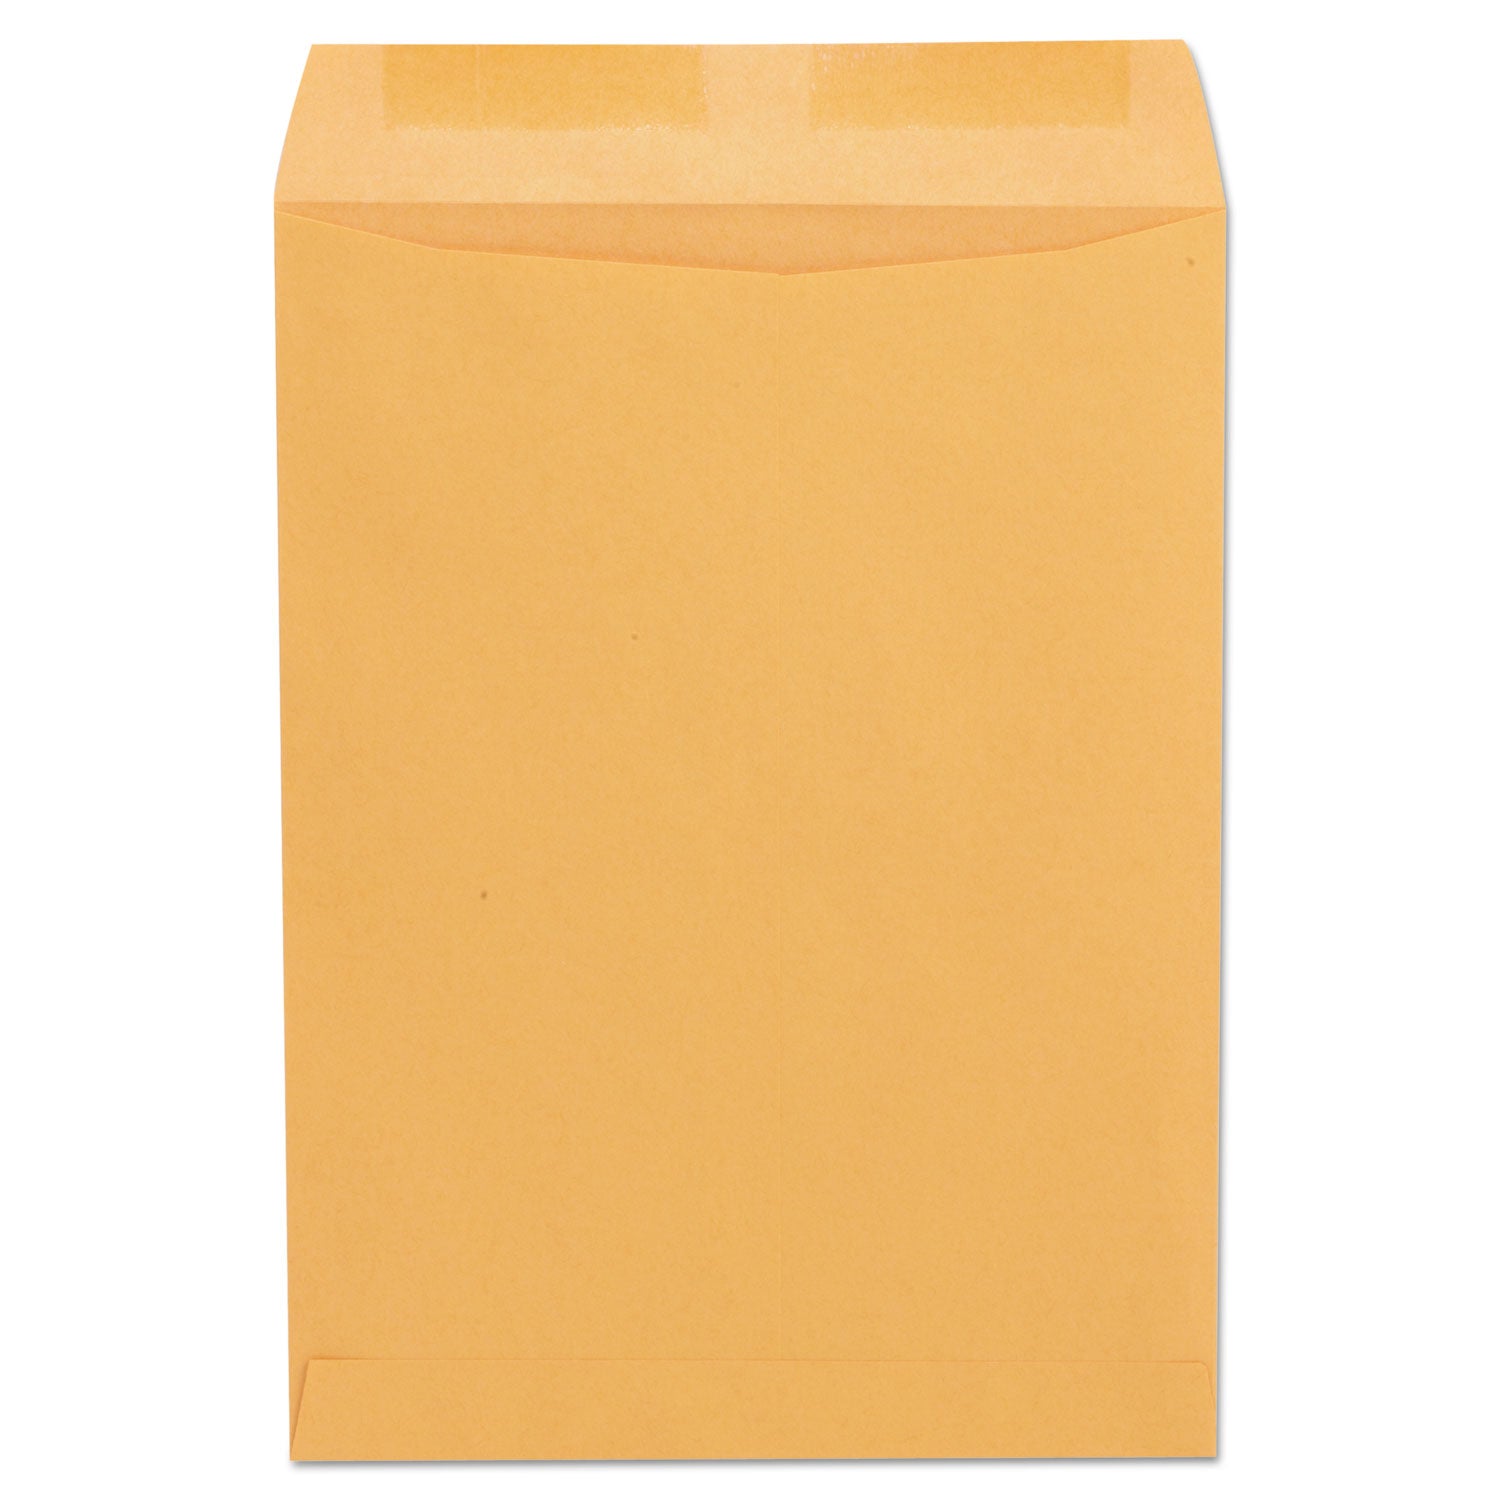 Catalog Envelope, 24 lb Bond Weight Paper, #10 1/2, Square Flap, Gummed Closure, 9 x 12, Brown Kraft, 250/Box - 